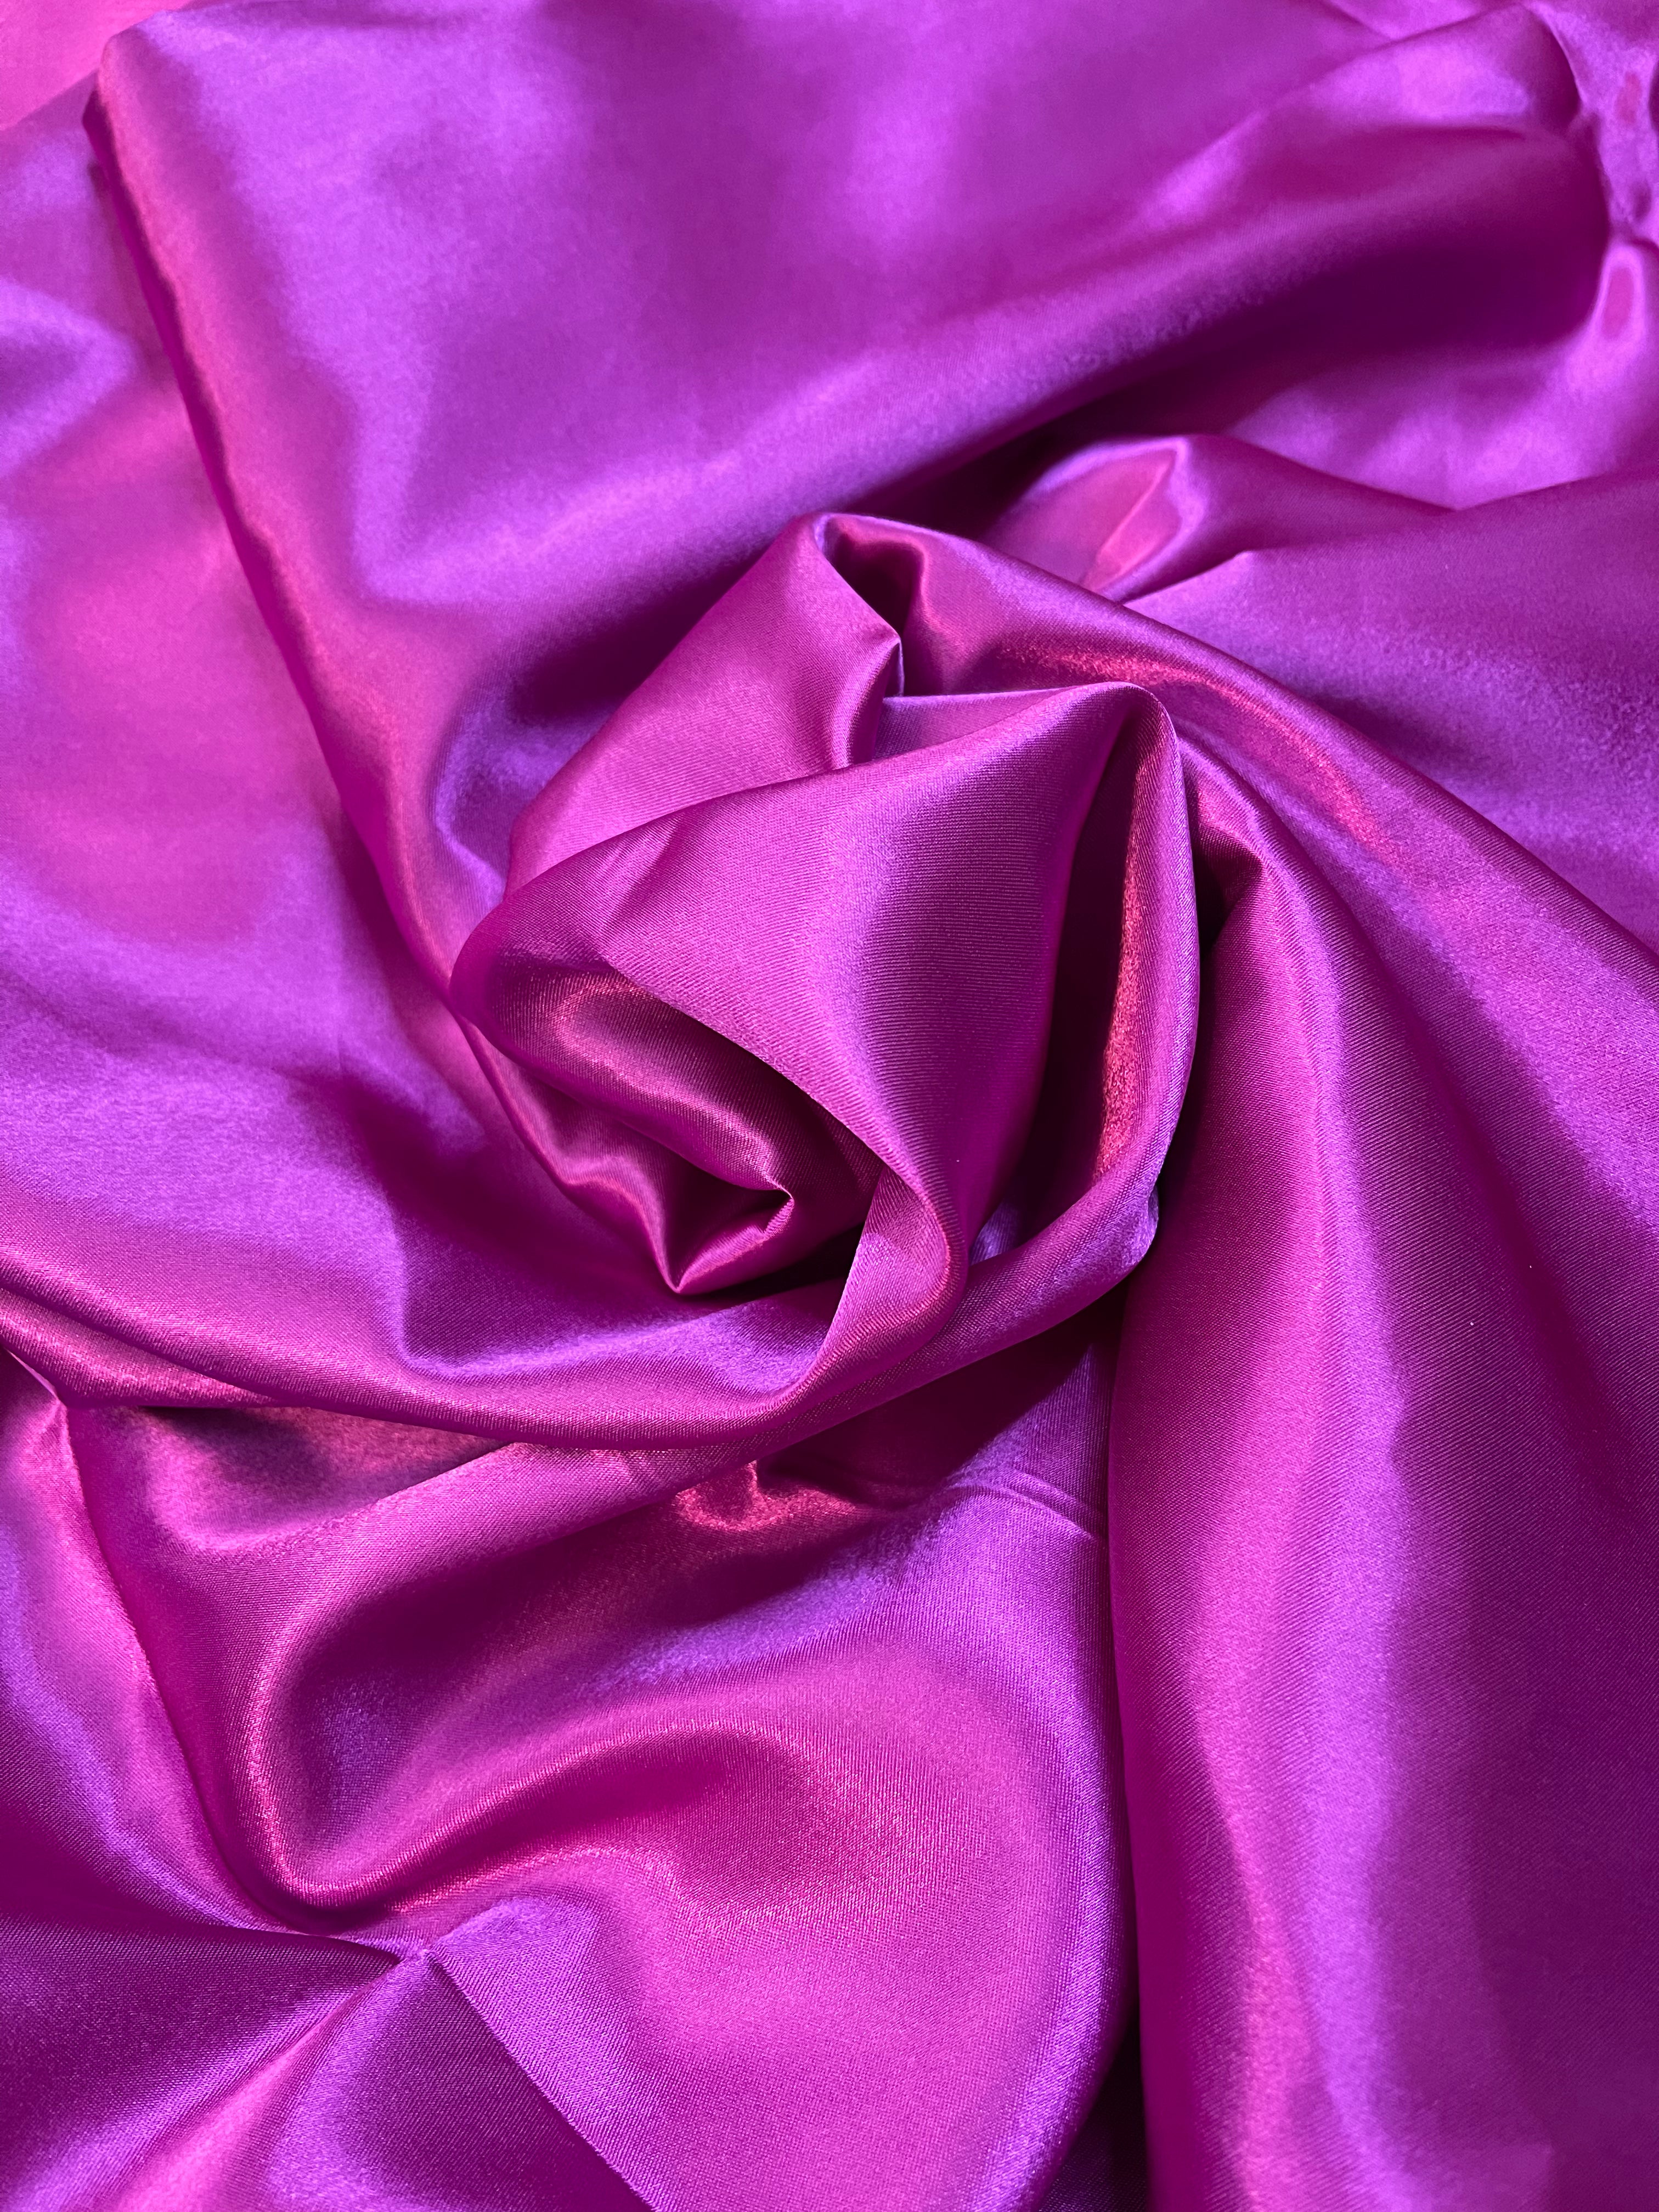 Clearance -bright pink satin silk yardage